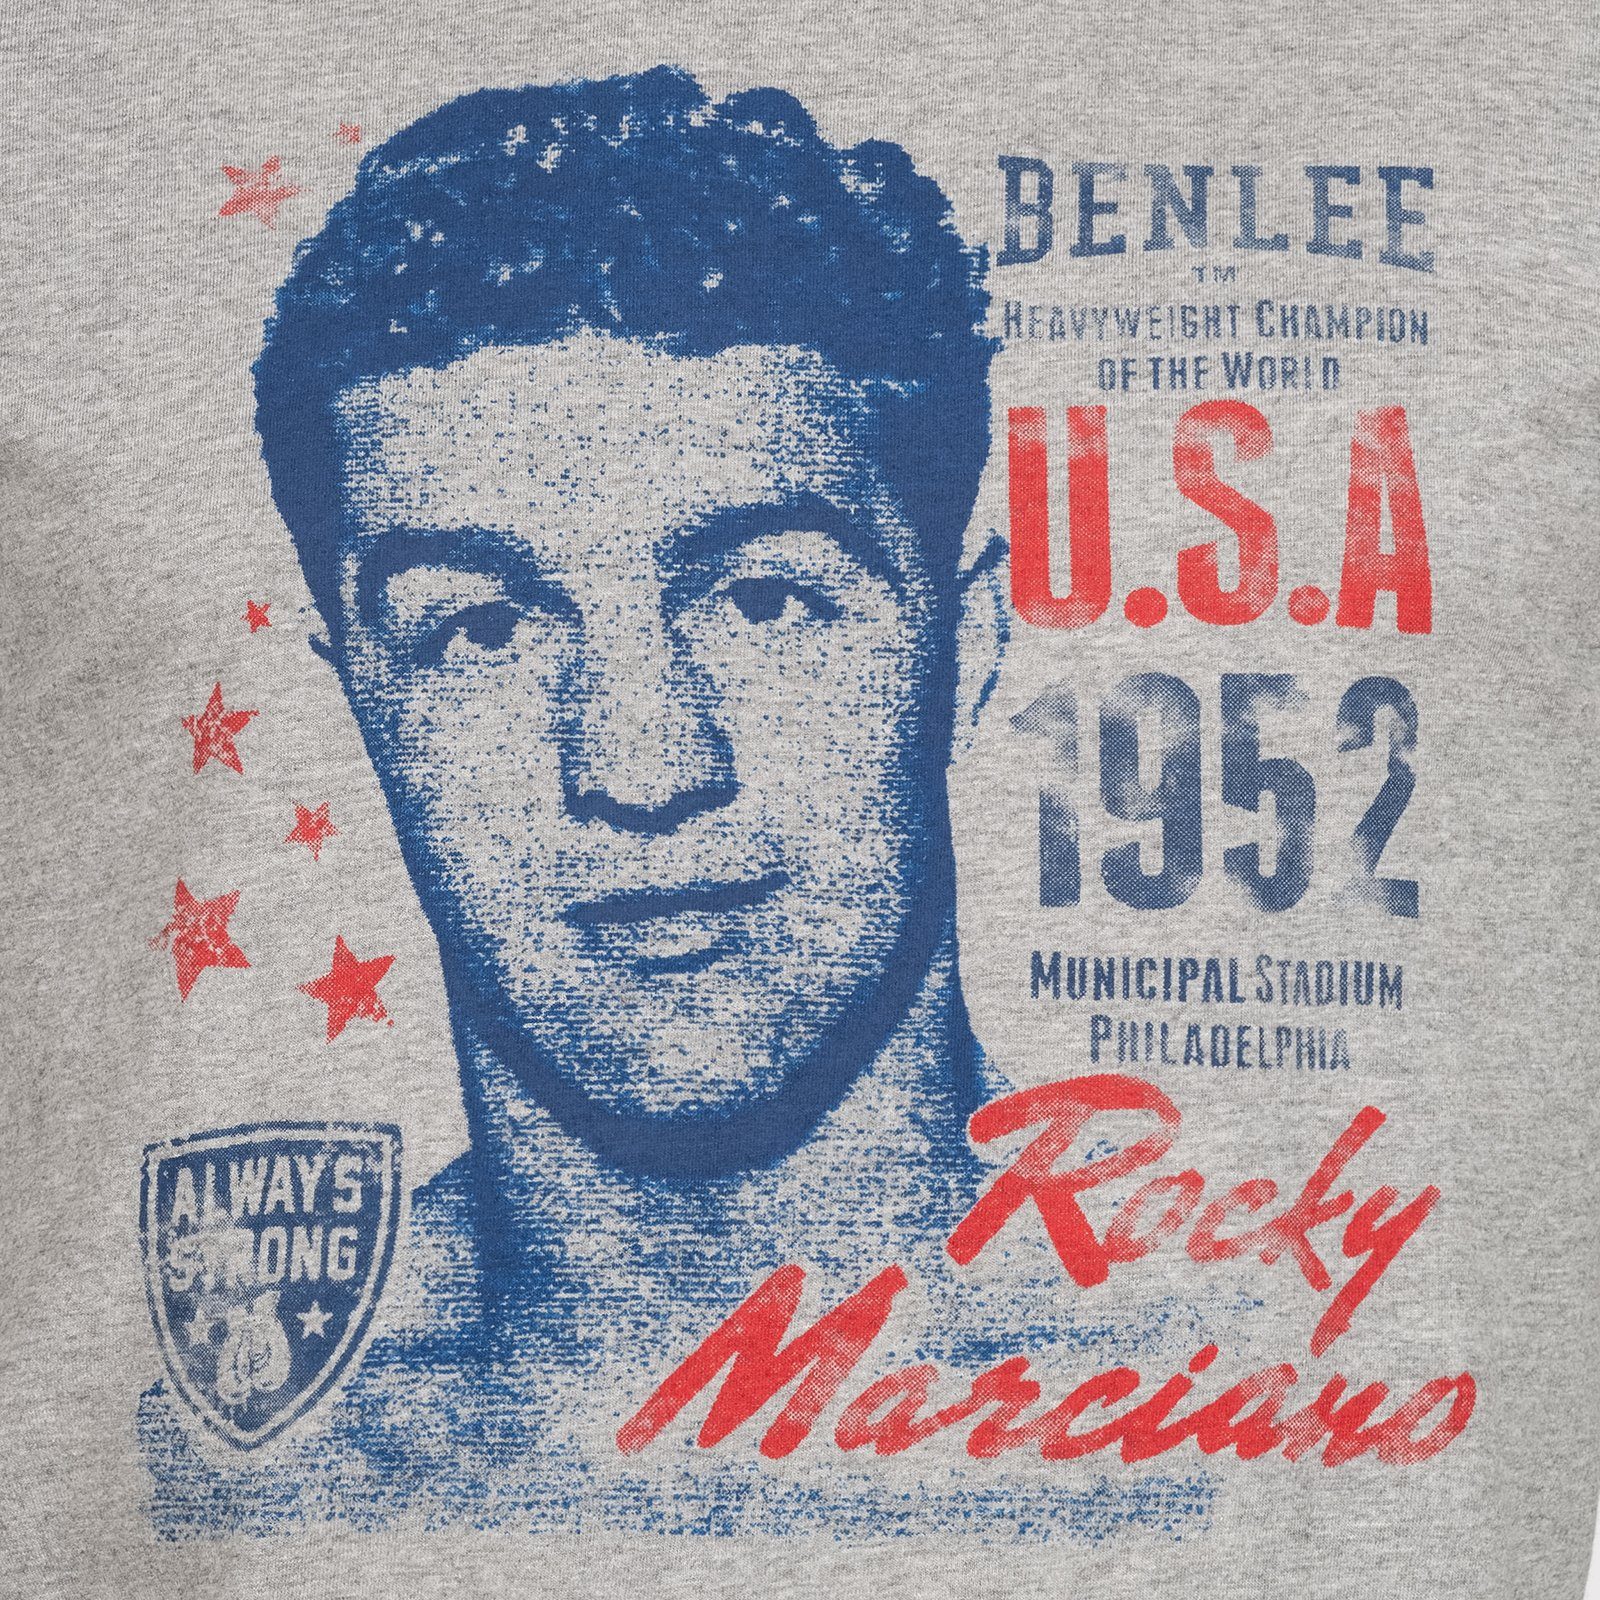 Benlee Rocky Marciano T-Shirt MANIFESTO